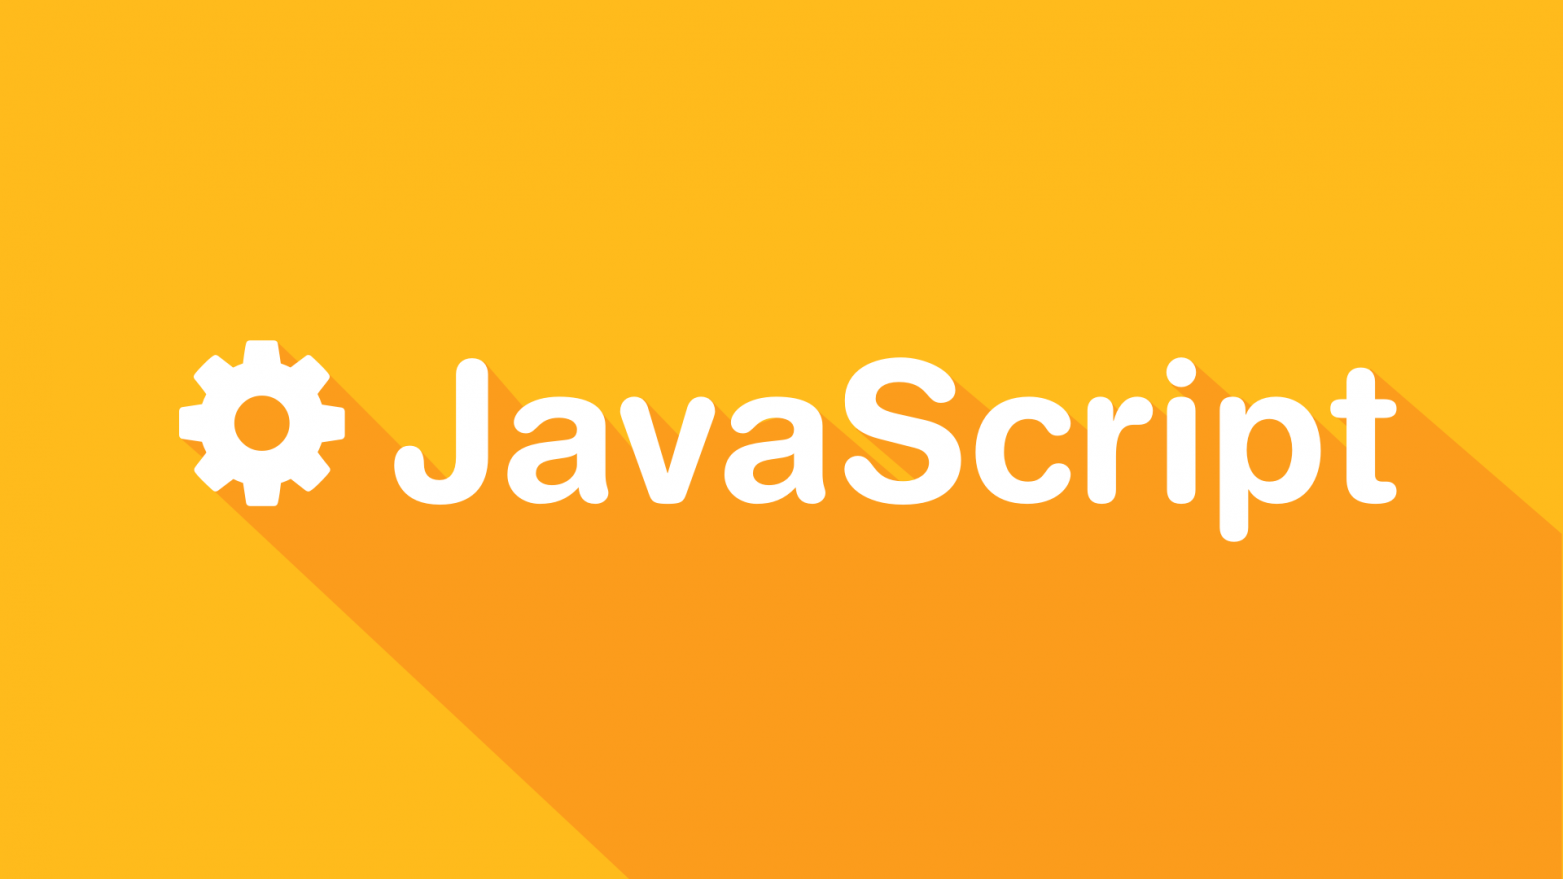 You are currently viewing 5 frameworks de Javascript para aprender em 2017